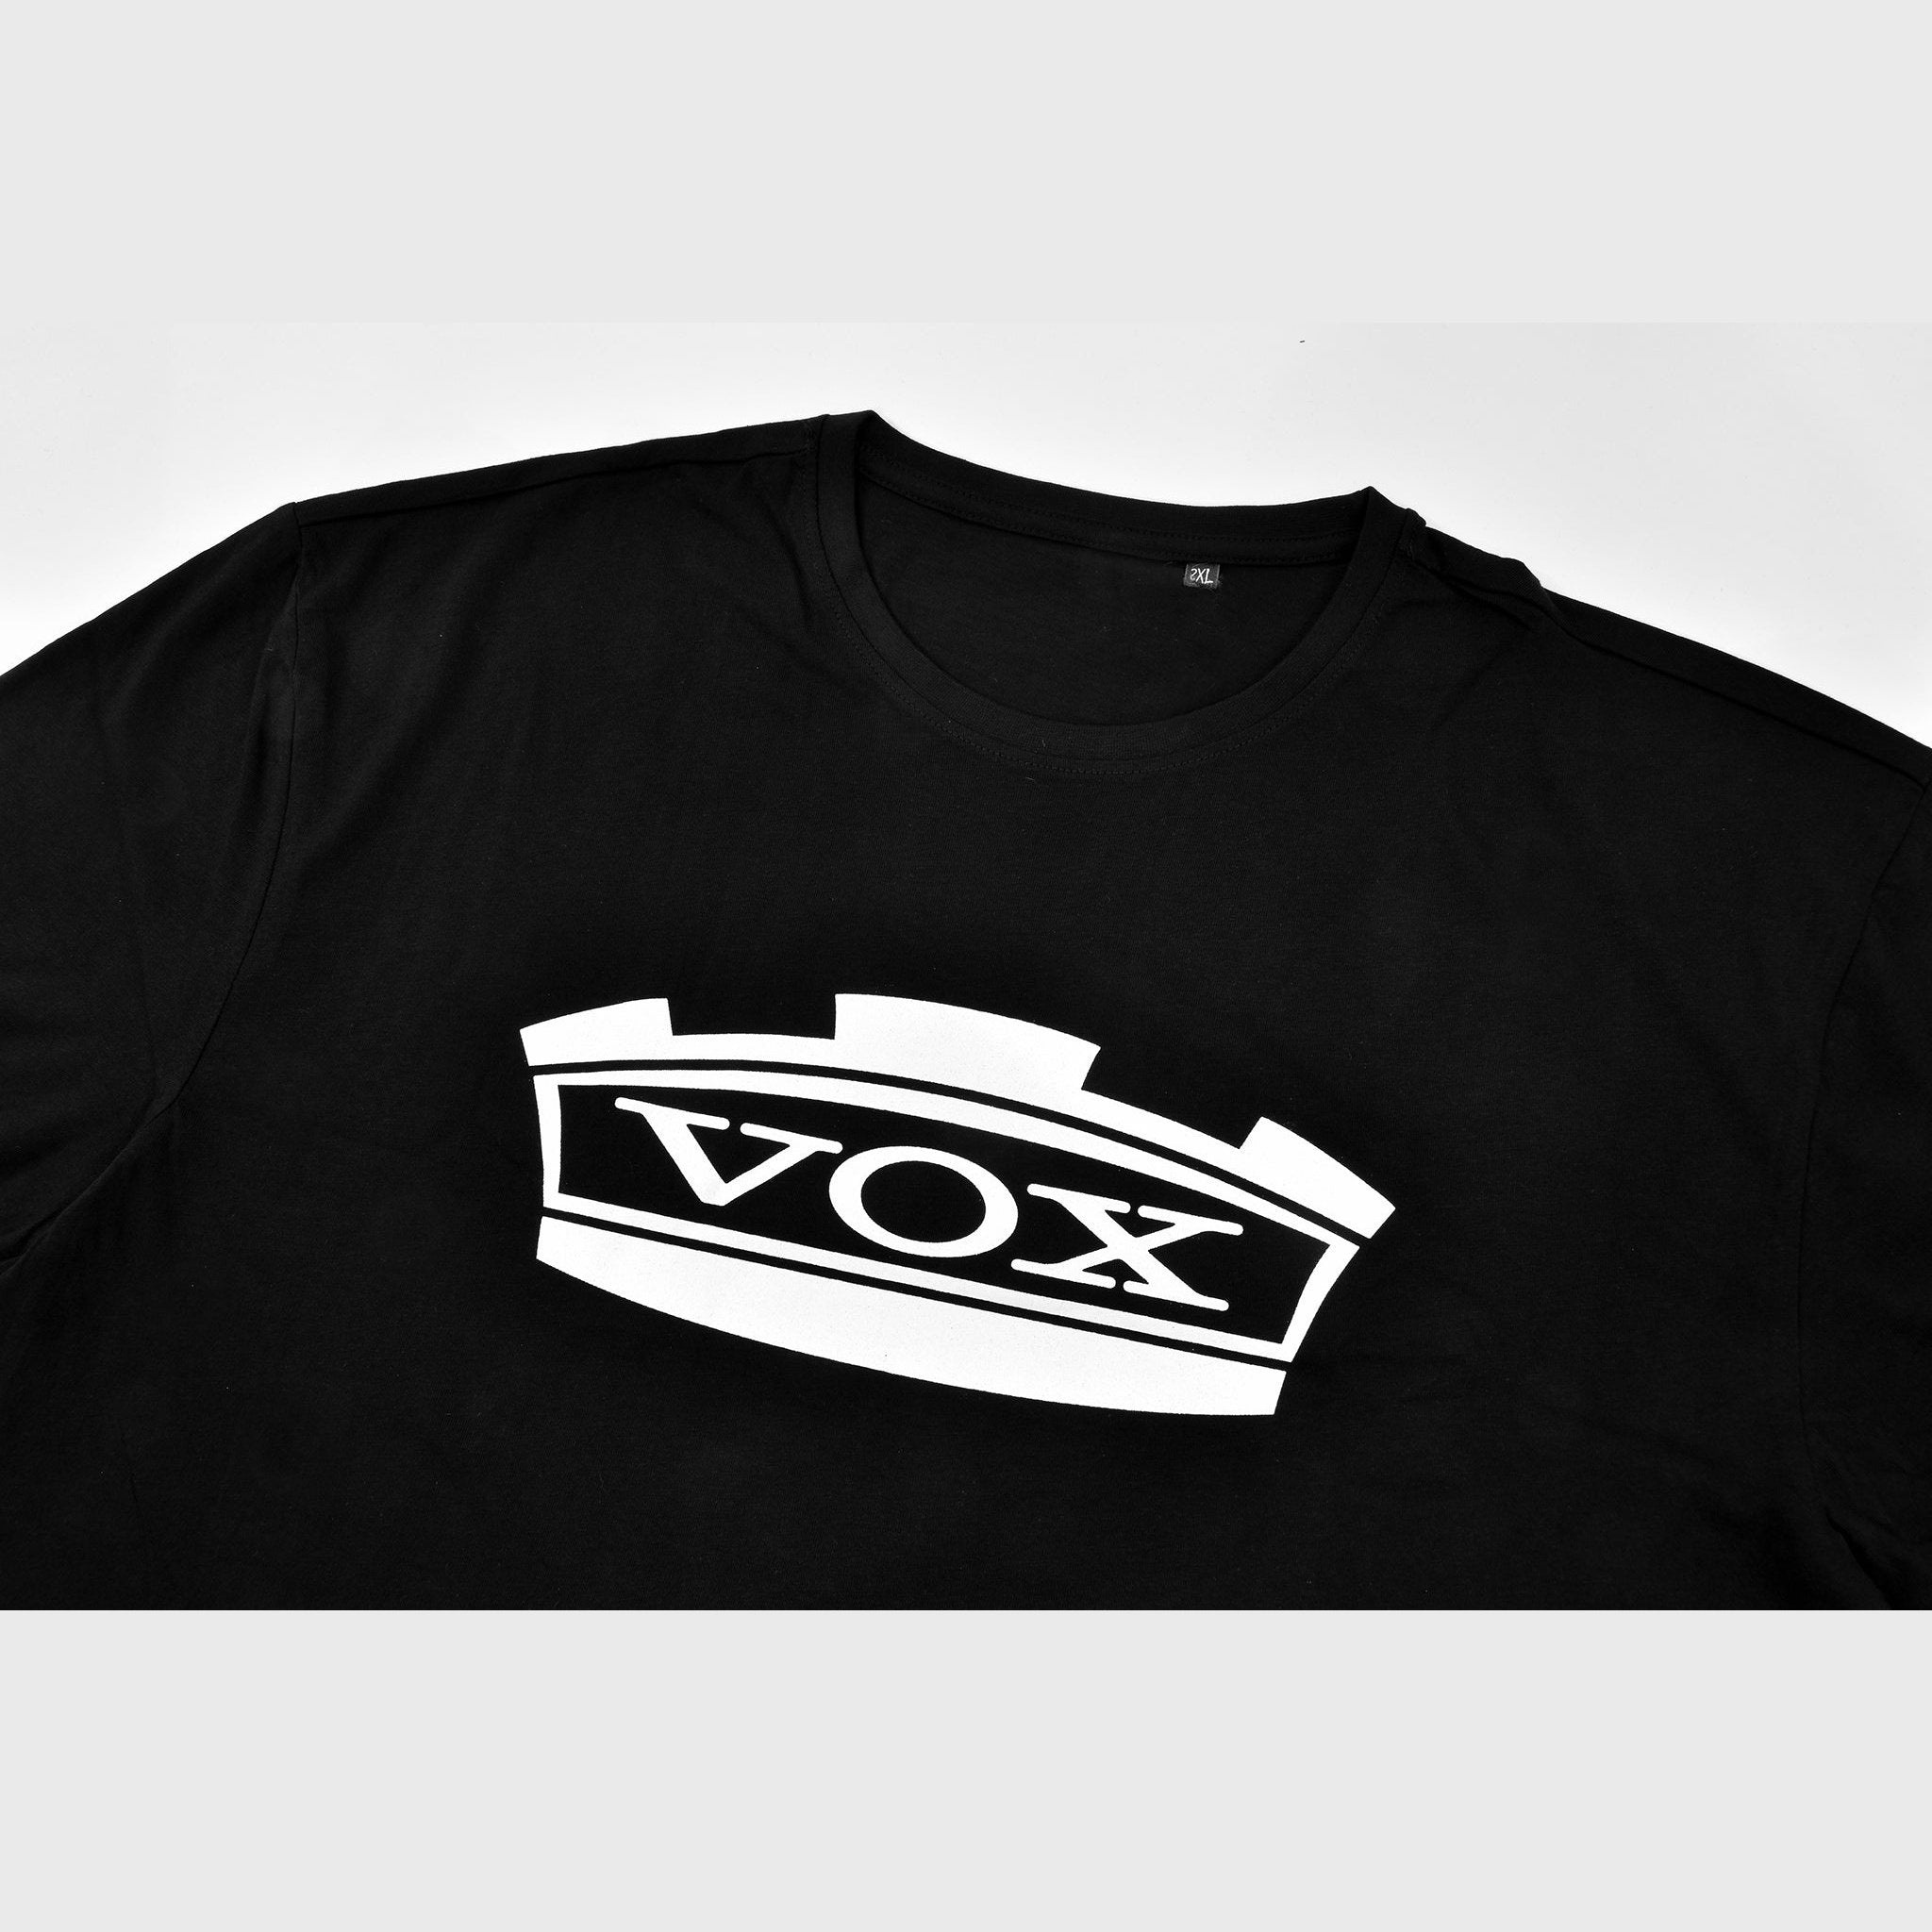 Vox Logo T-Shirt 2